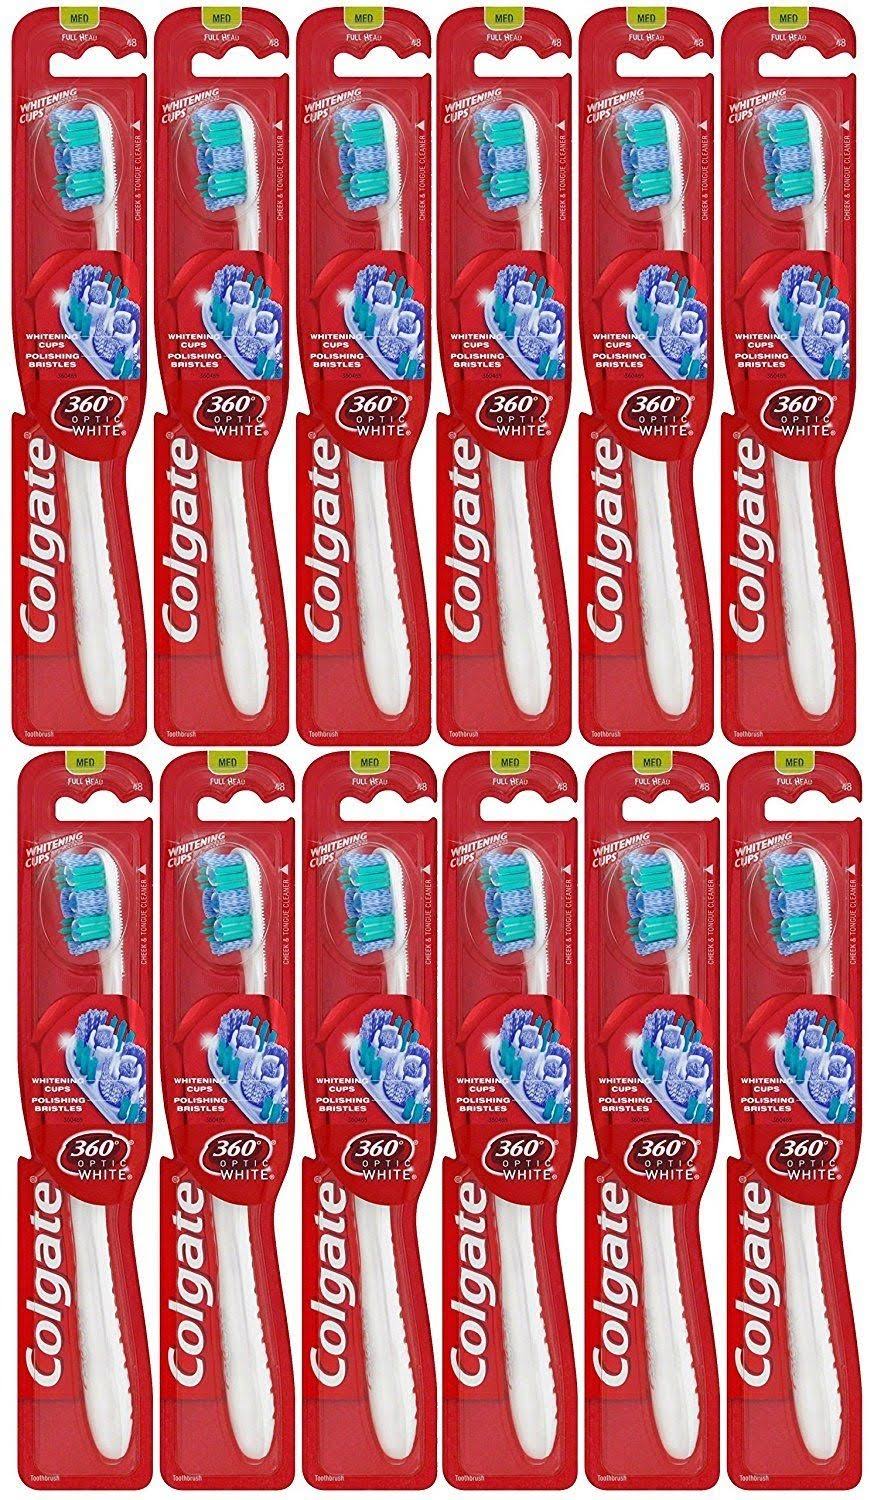 Colgate 360 Optic White Toothbrush